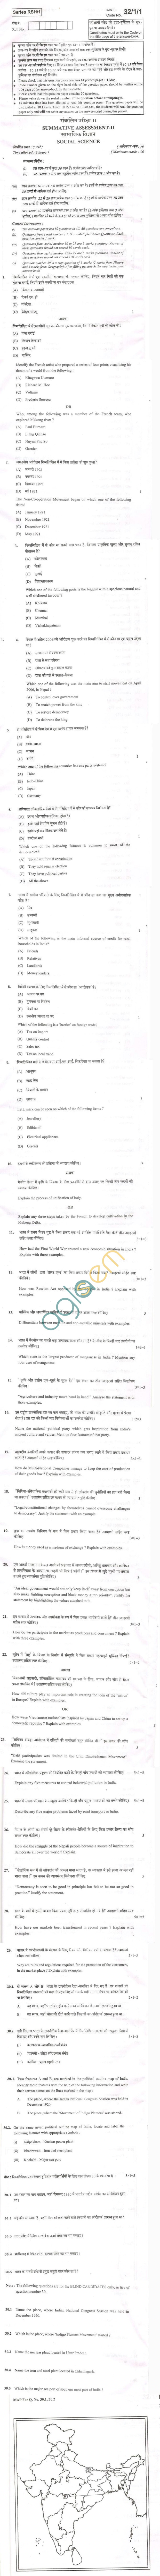 CBSE Board Exam 2013 Class X Question Paper - Social Science